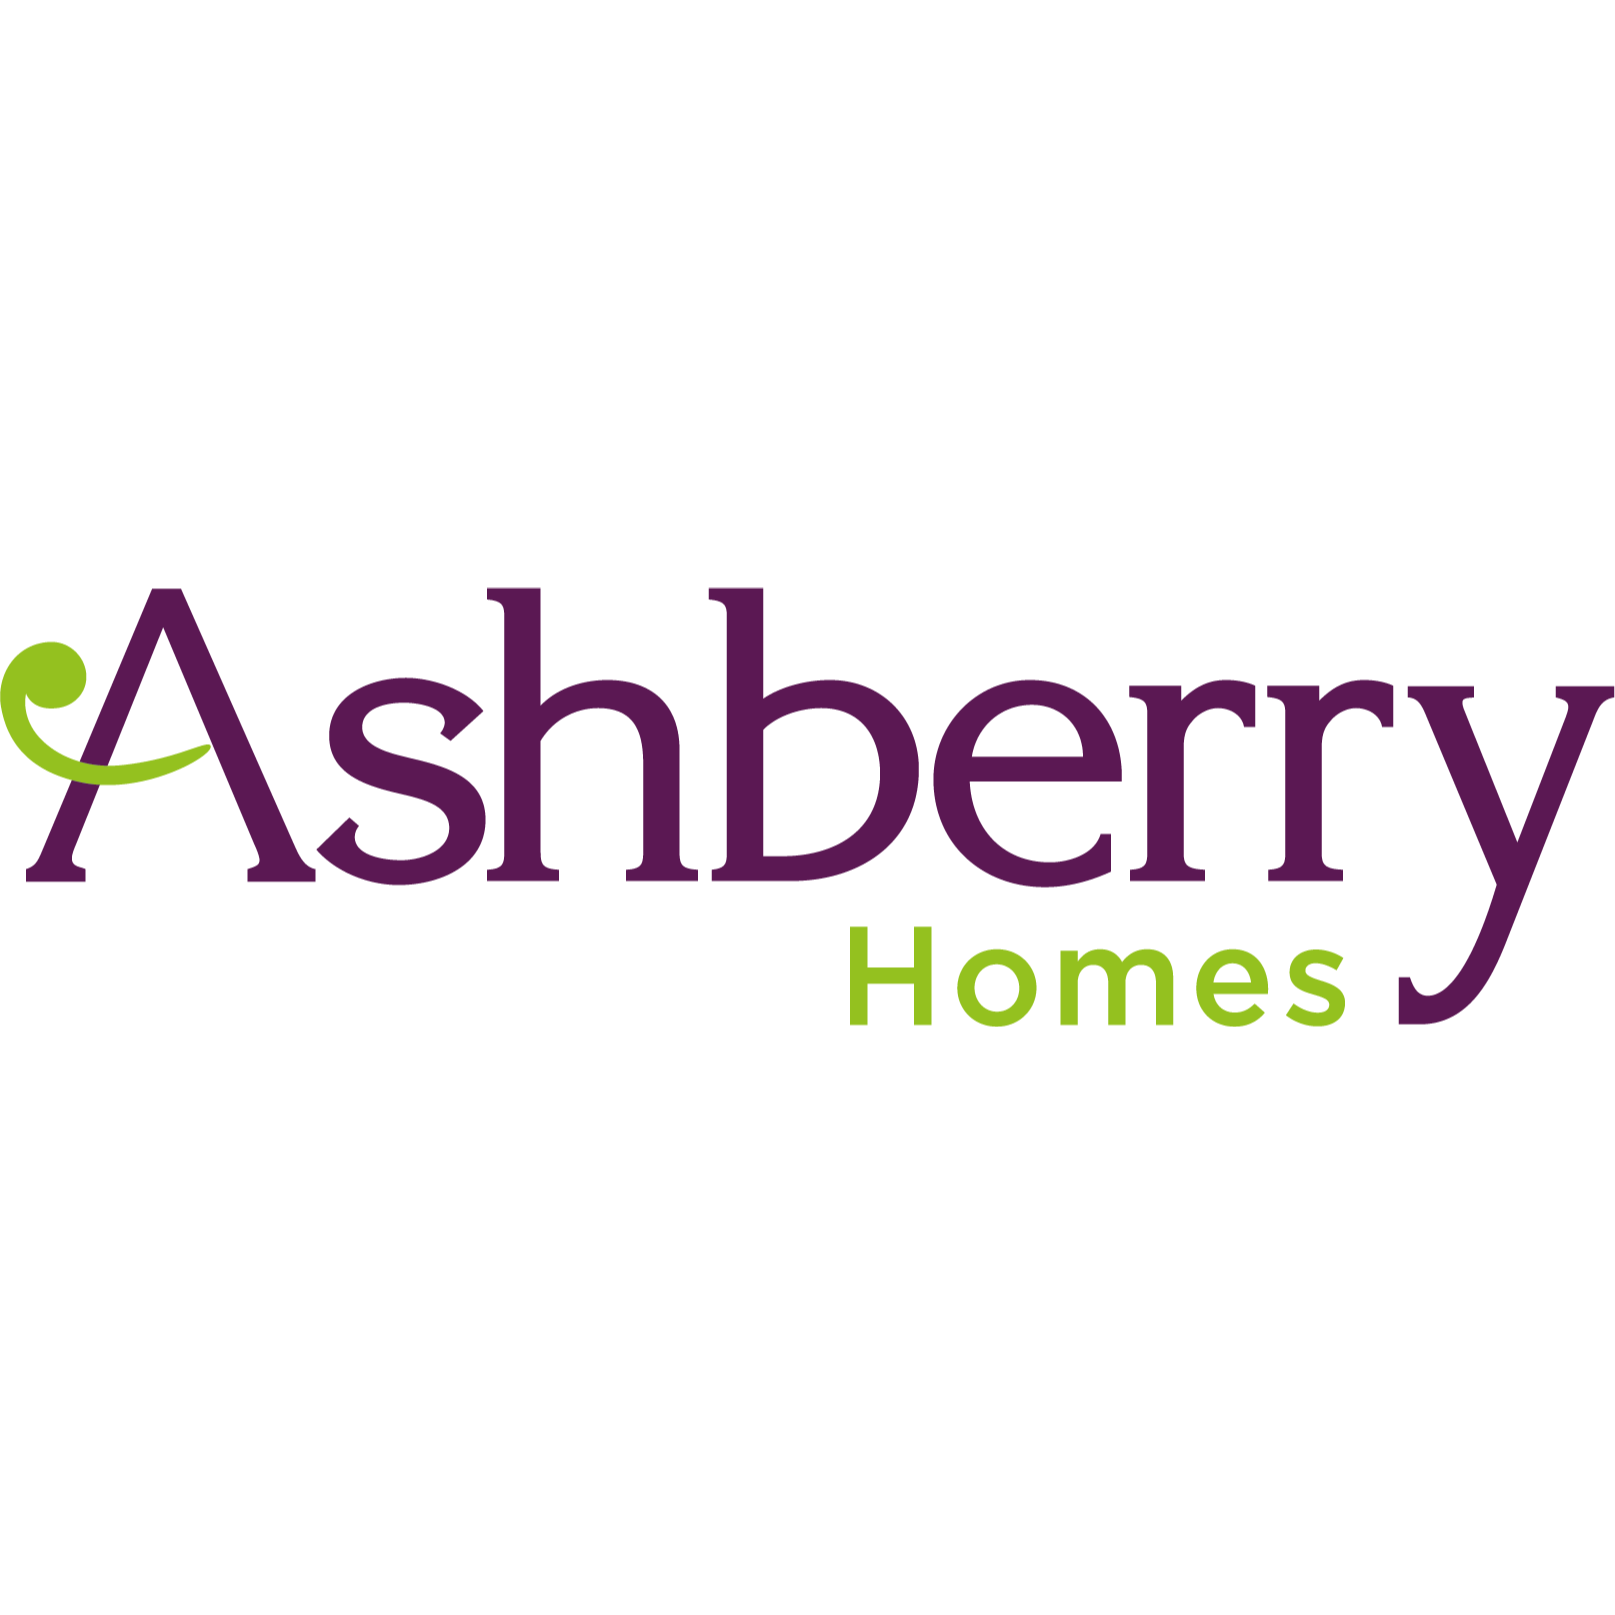 Ashberry Homes - Hall Brook Rise - Coventry, West Midlands CV7 8JJ - 02477 282465 | ShowMeLocal.com